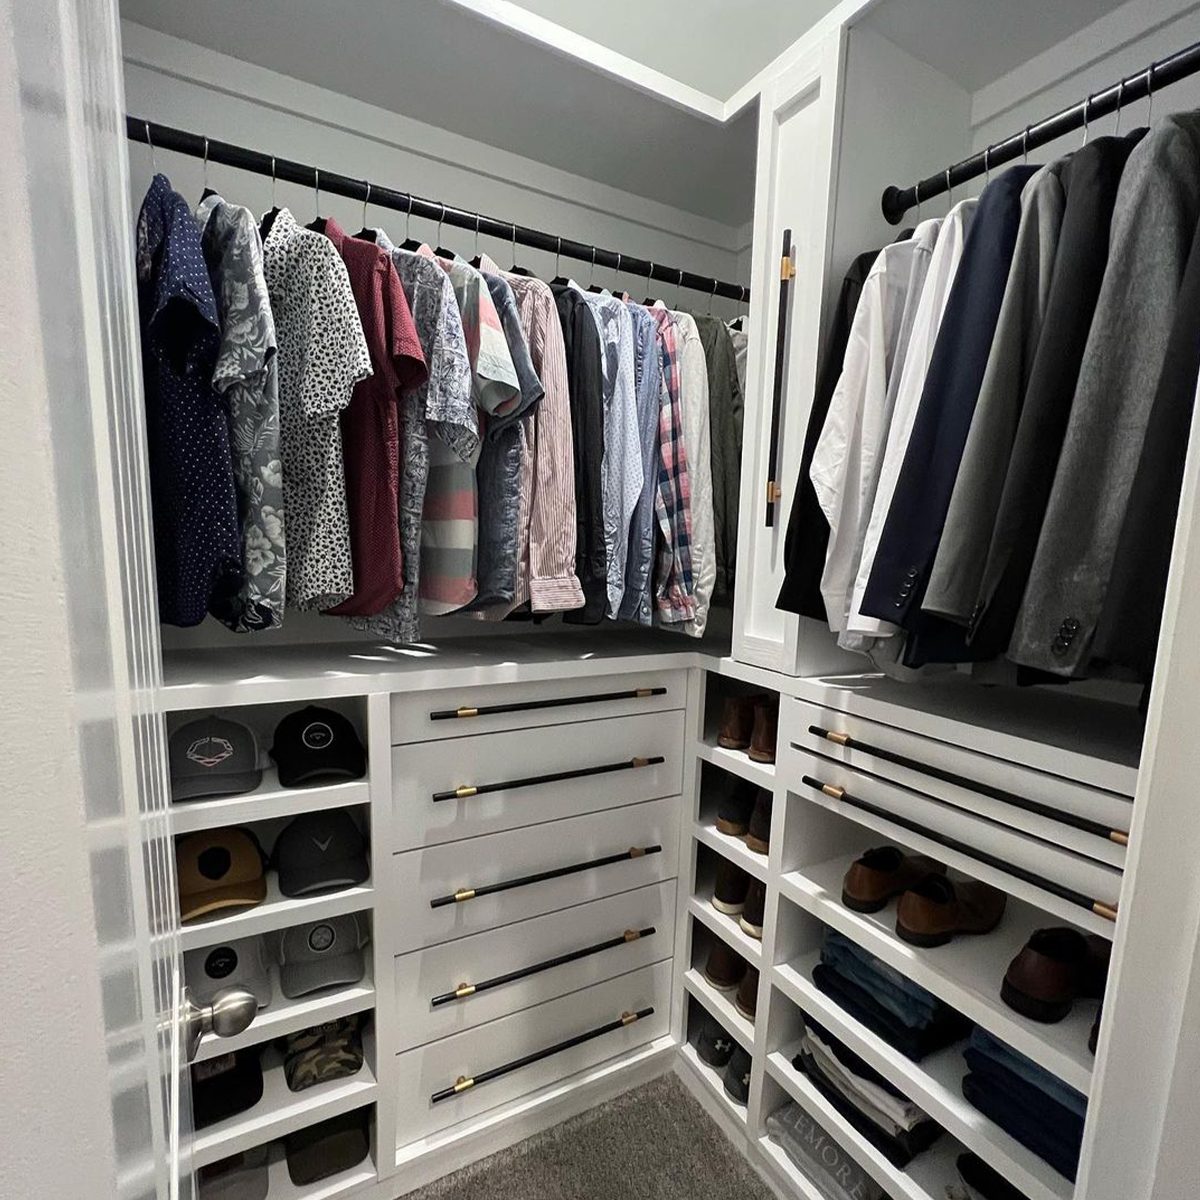 10 Bedroom Closet Ideas To Optimize Your Space Diy Closet System Courtesy @builder.baker.boymom.jpg 1